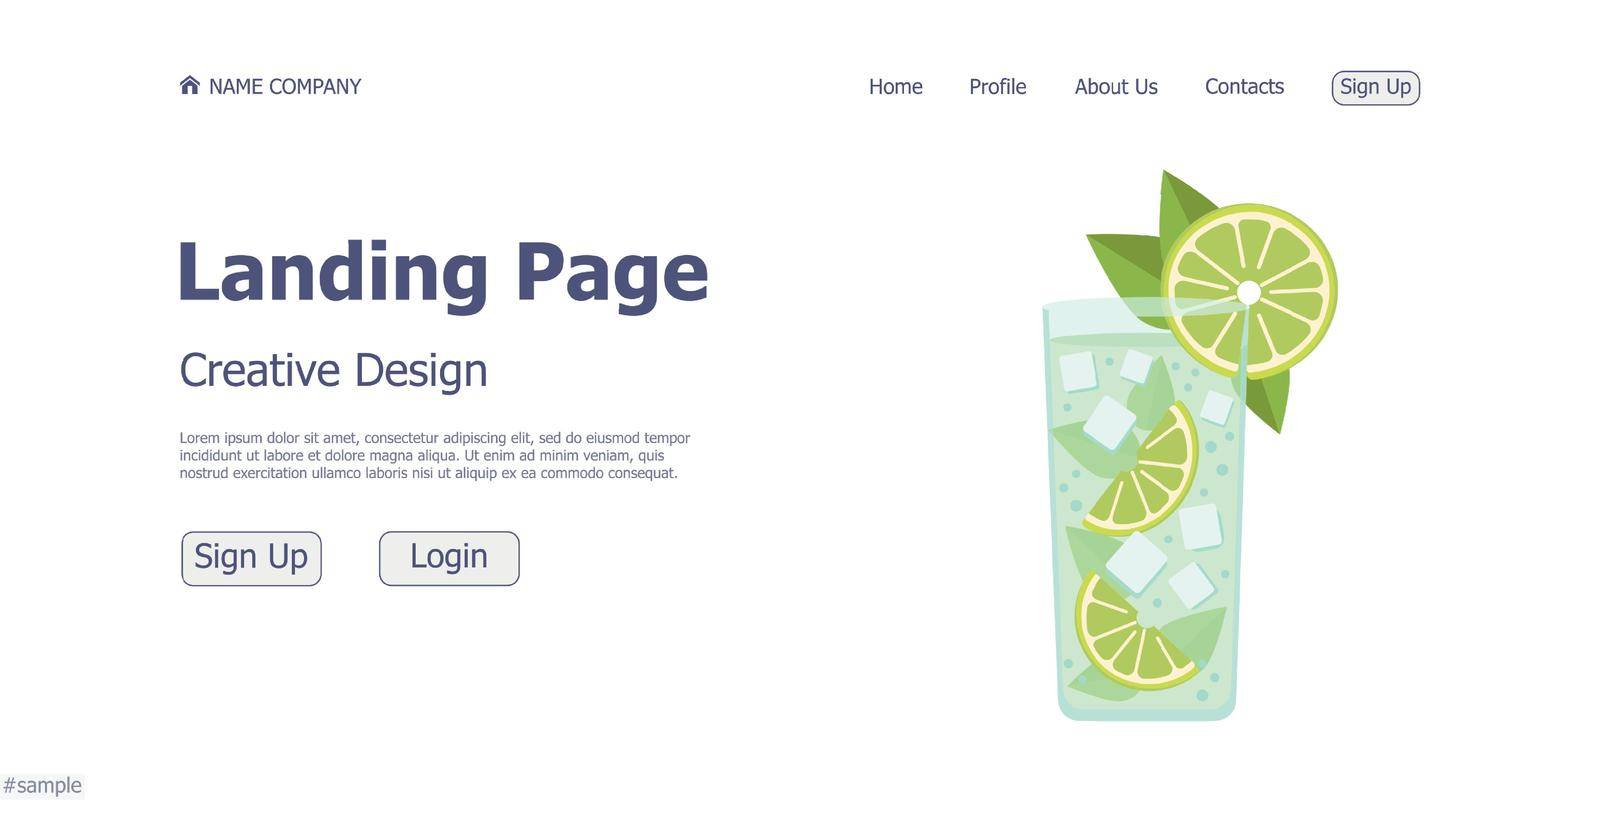 Cocktail bar website landing page design concept - Vector by BEMPhoto